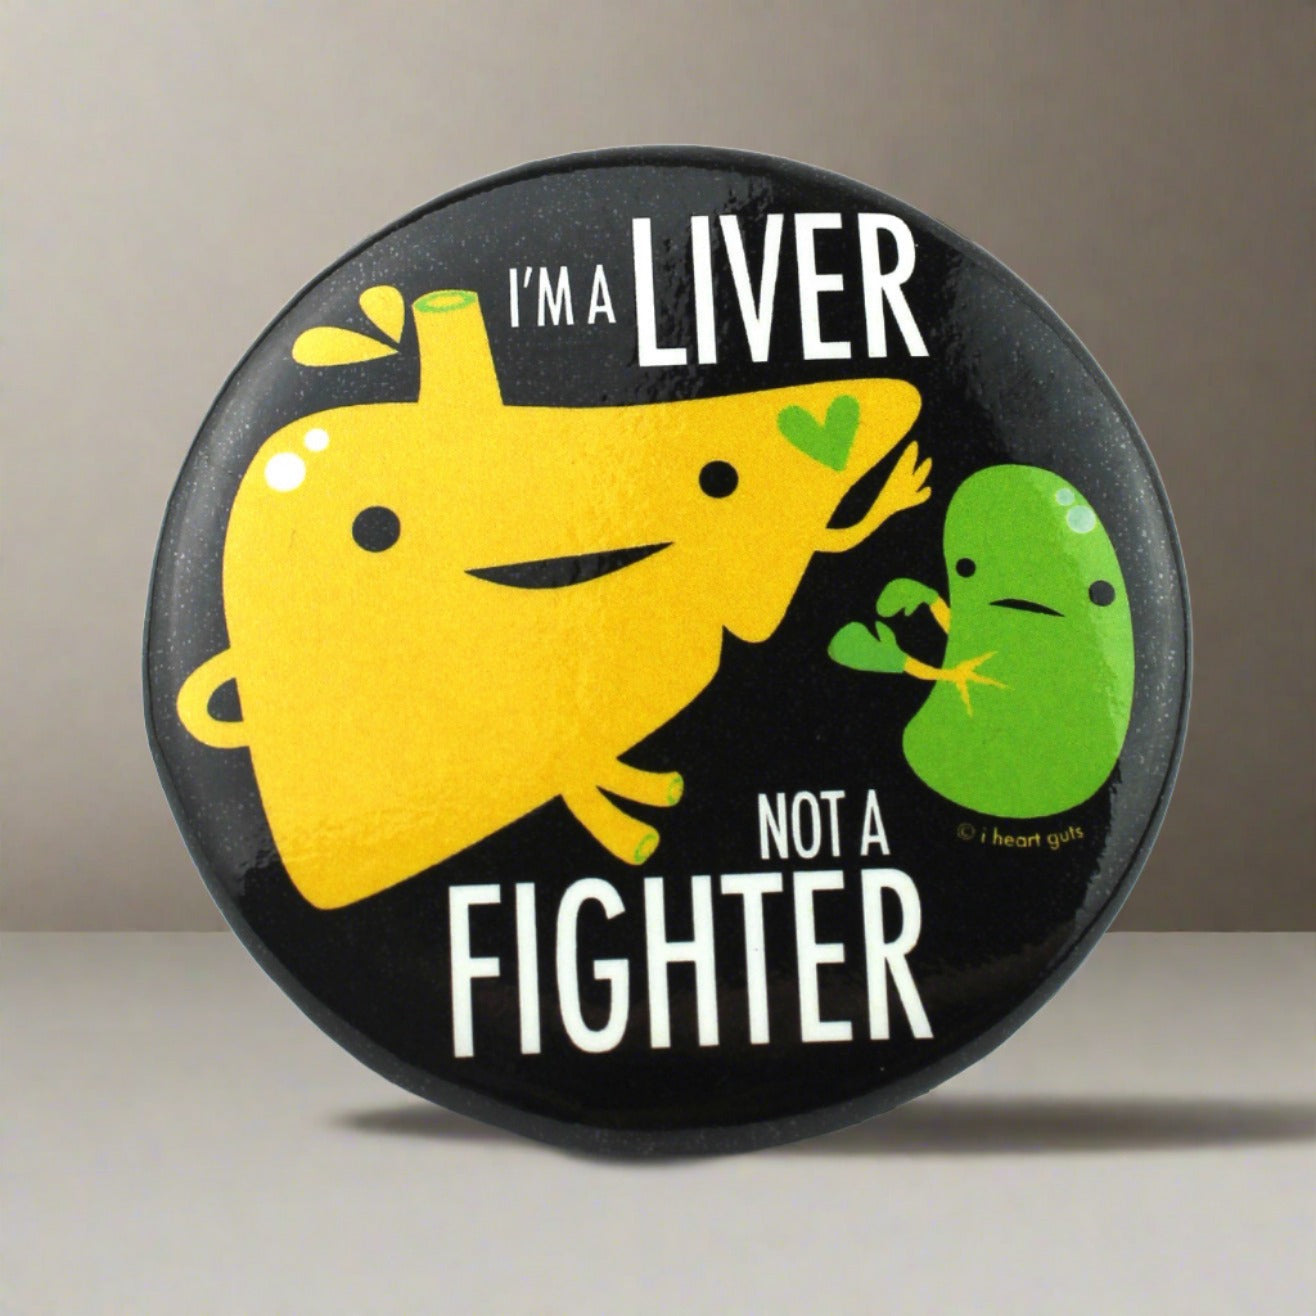 I'm a Liver Not a Fighter Magnet - Black Background - I Heart Guts